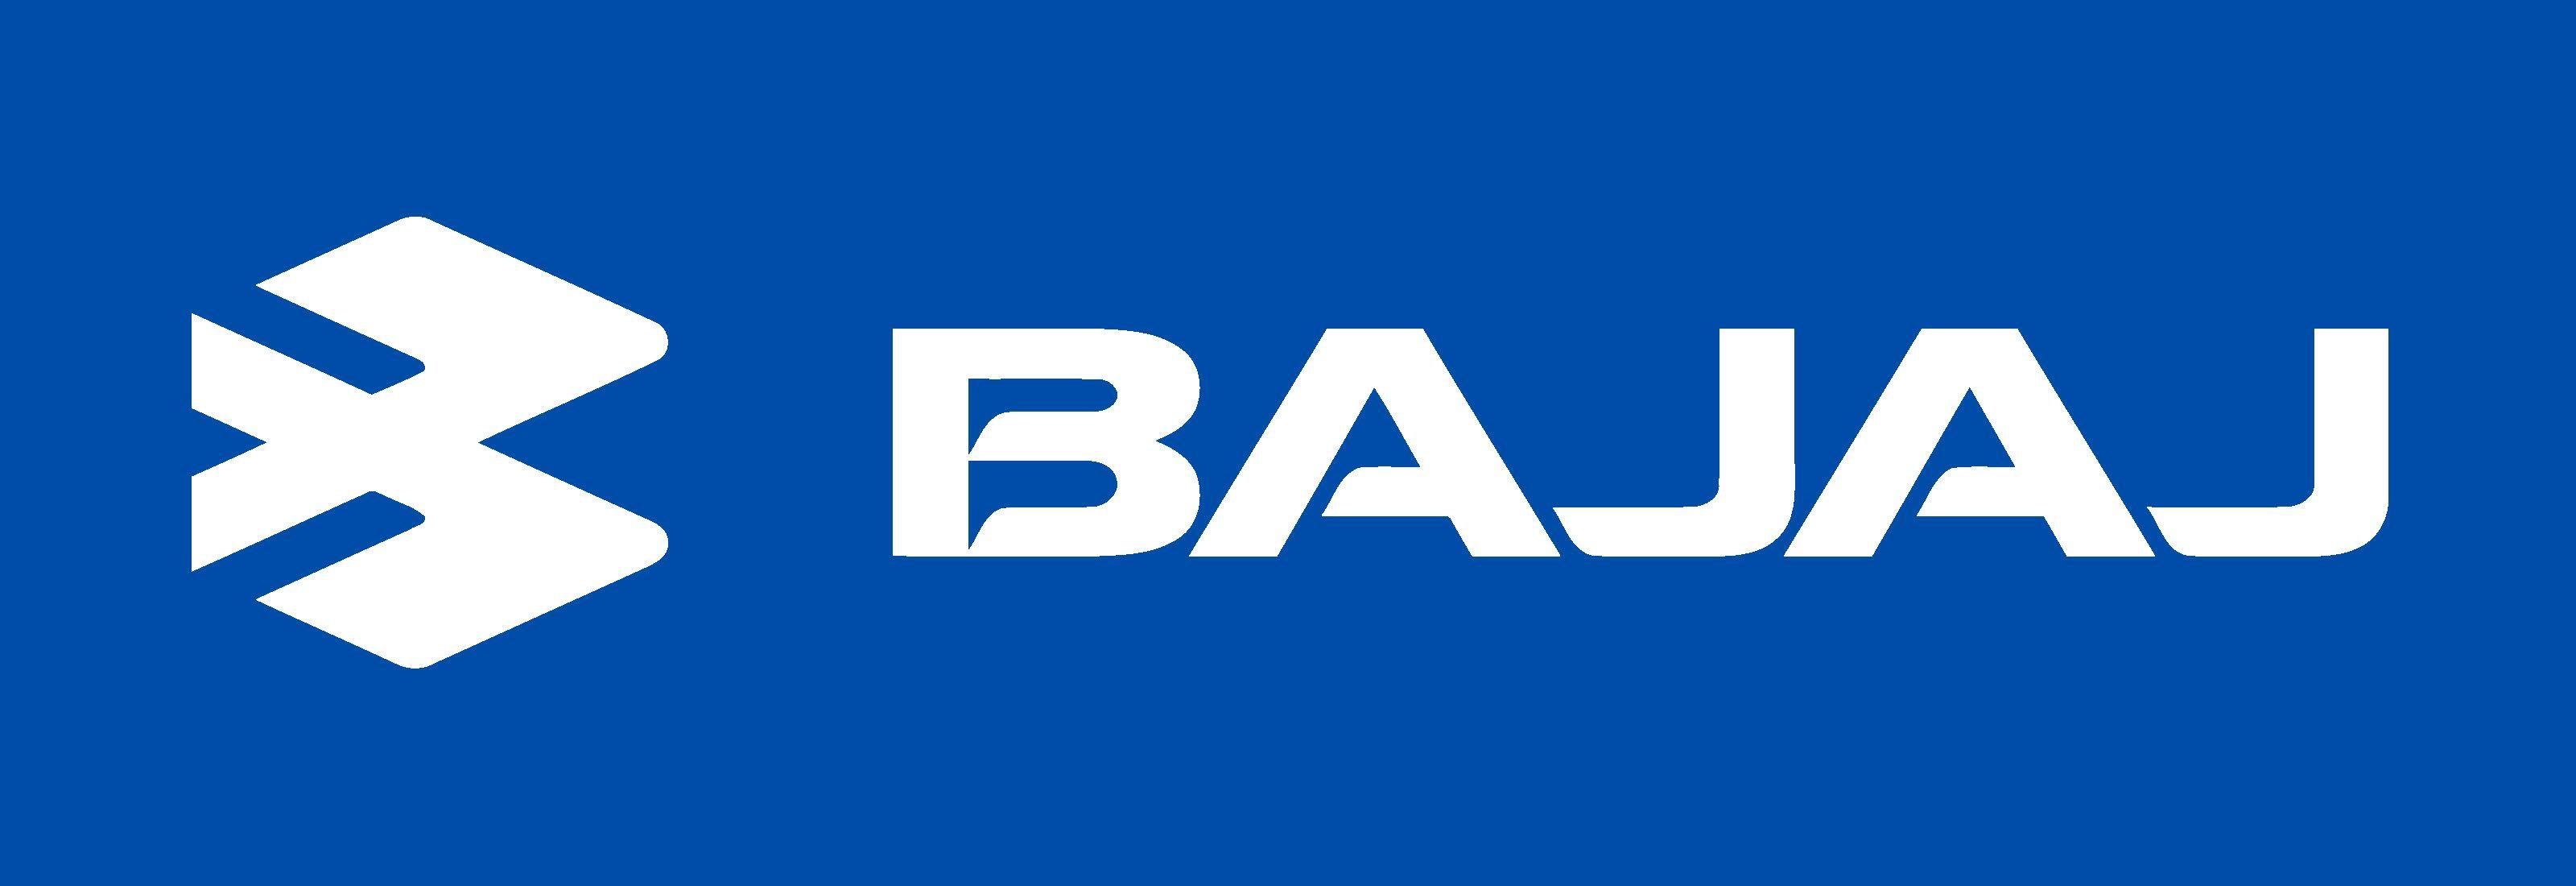 Bajaj Logo - Bajaj Logo Meaning and History, latest models | World Cars Brands